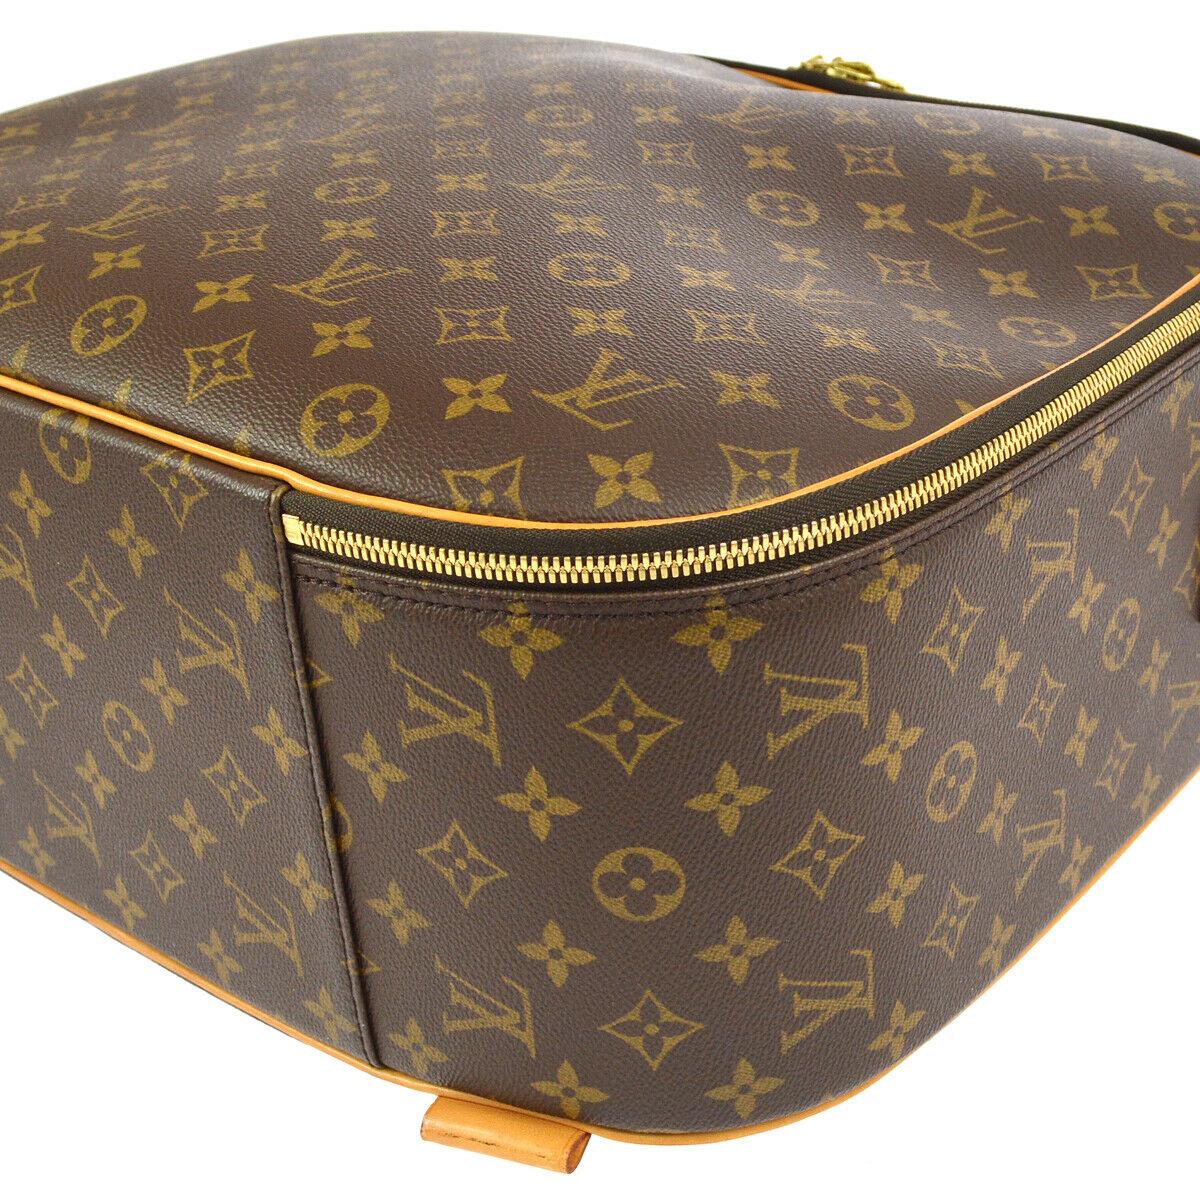 Brown Louis Vuitton Monogram Men's Women's Carryall Travel Duffle SuitcaseShoulder Bag